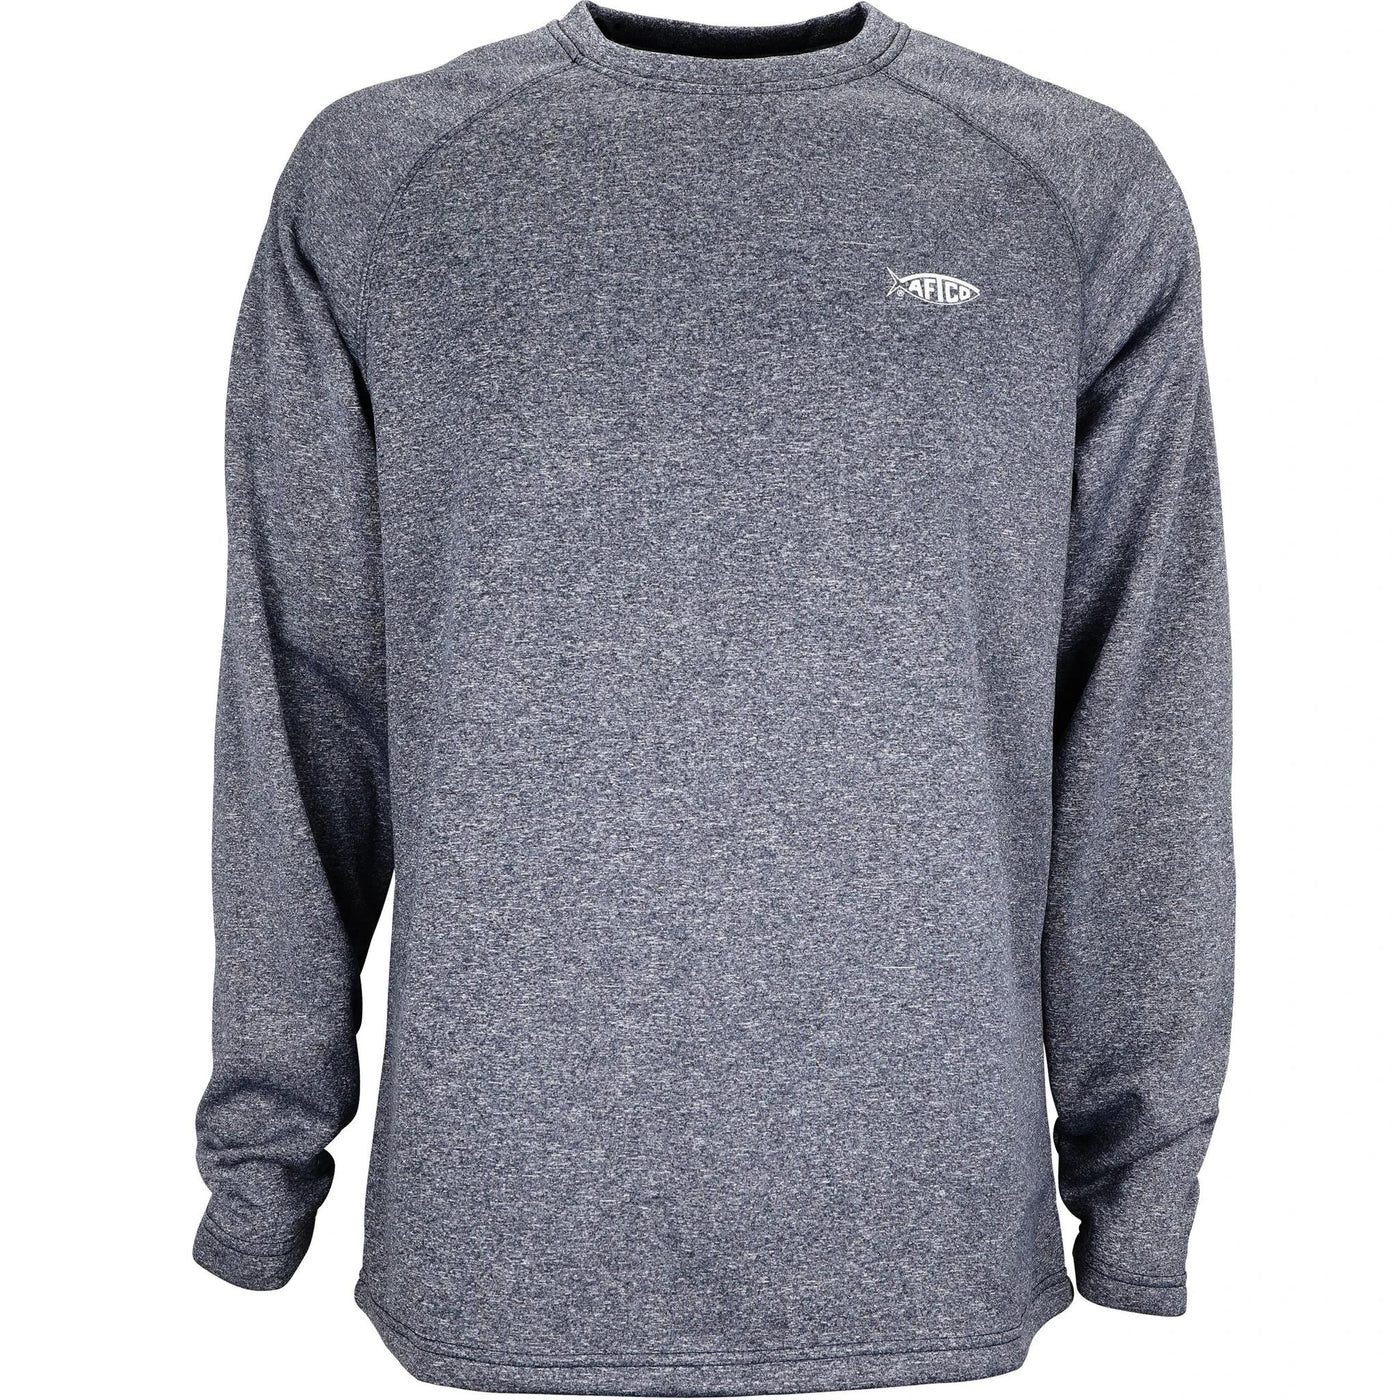 Aftco Vista L/S Crew Sweatshirt-MENS CLOTHING-Kevin's Fine Outdoor Gear & Apparel